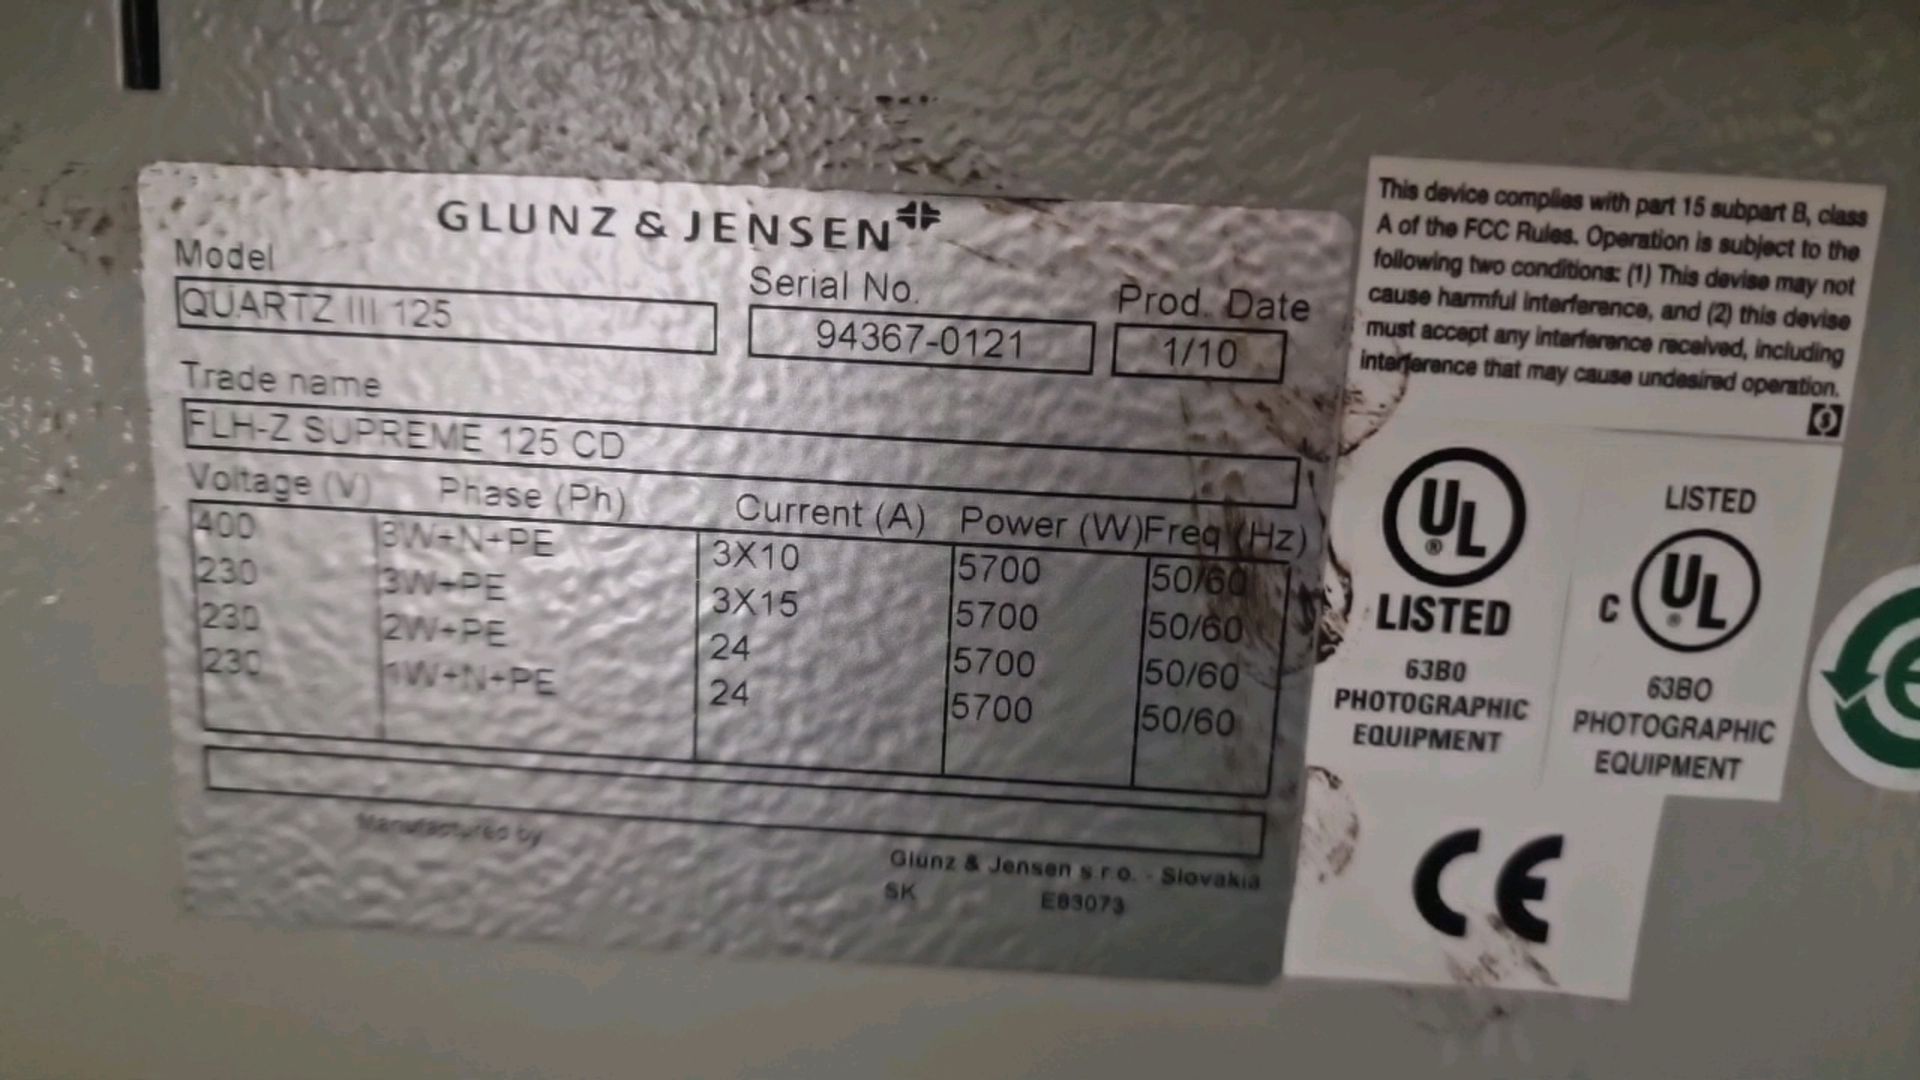 2010 Glunz & Jensen Quartz 111 125 Thermal Plate Processor - Image 4 of 9